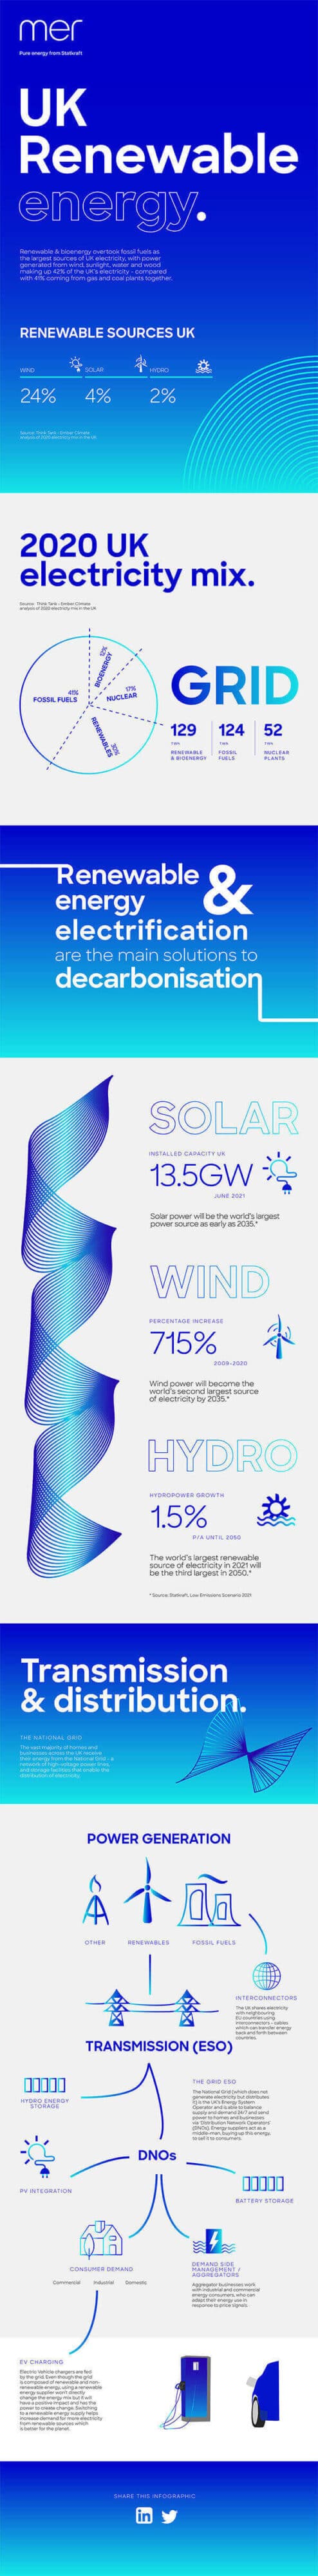 renewable energy the grid